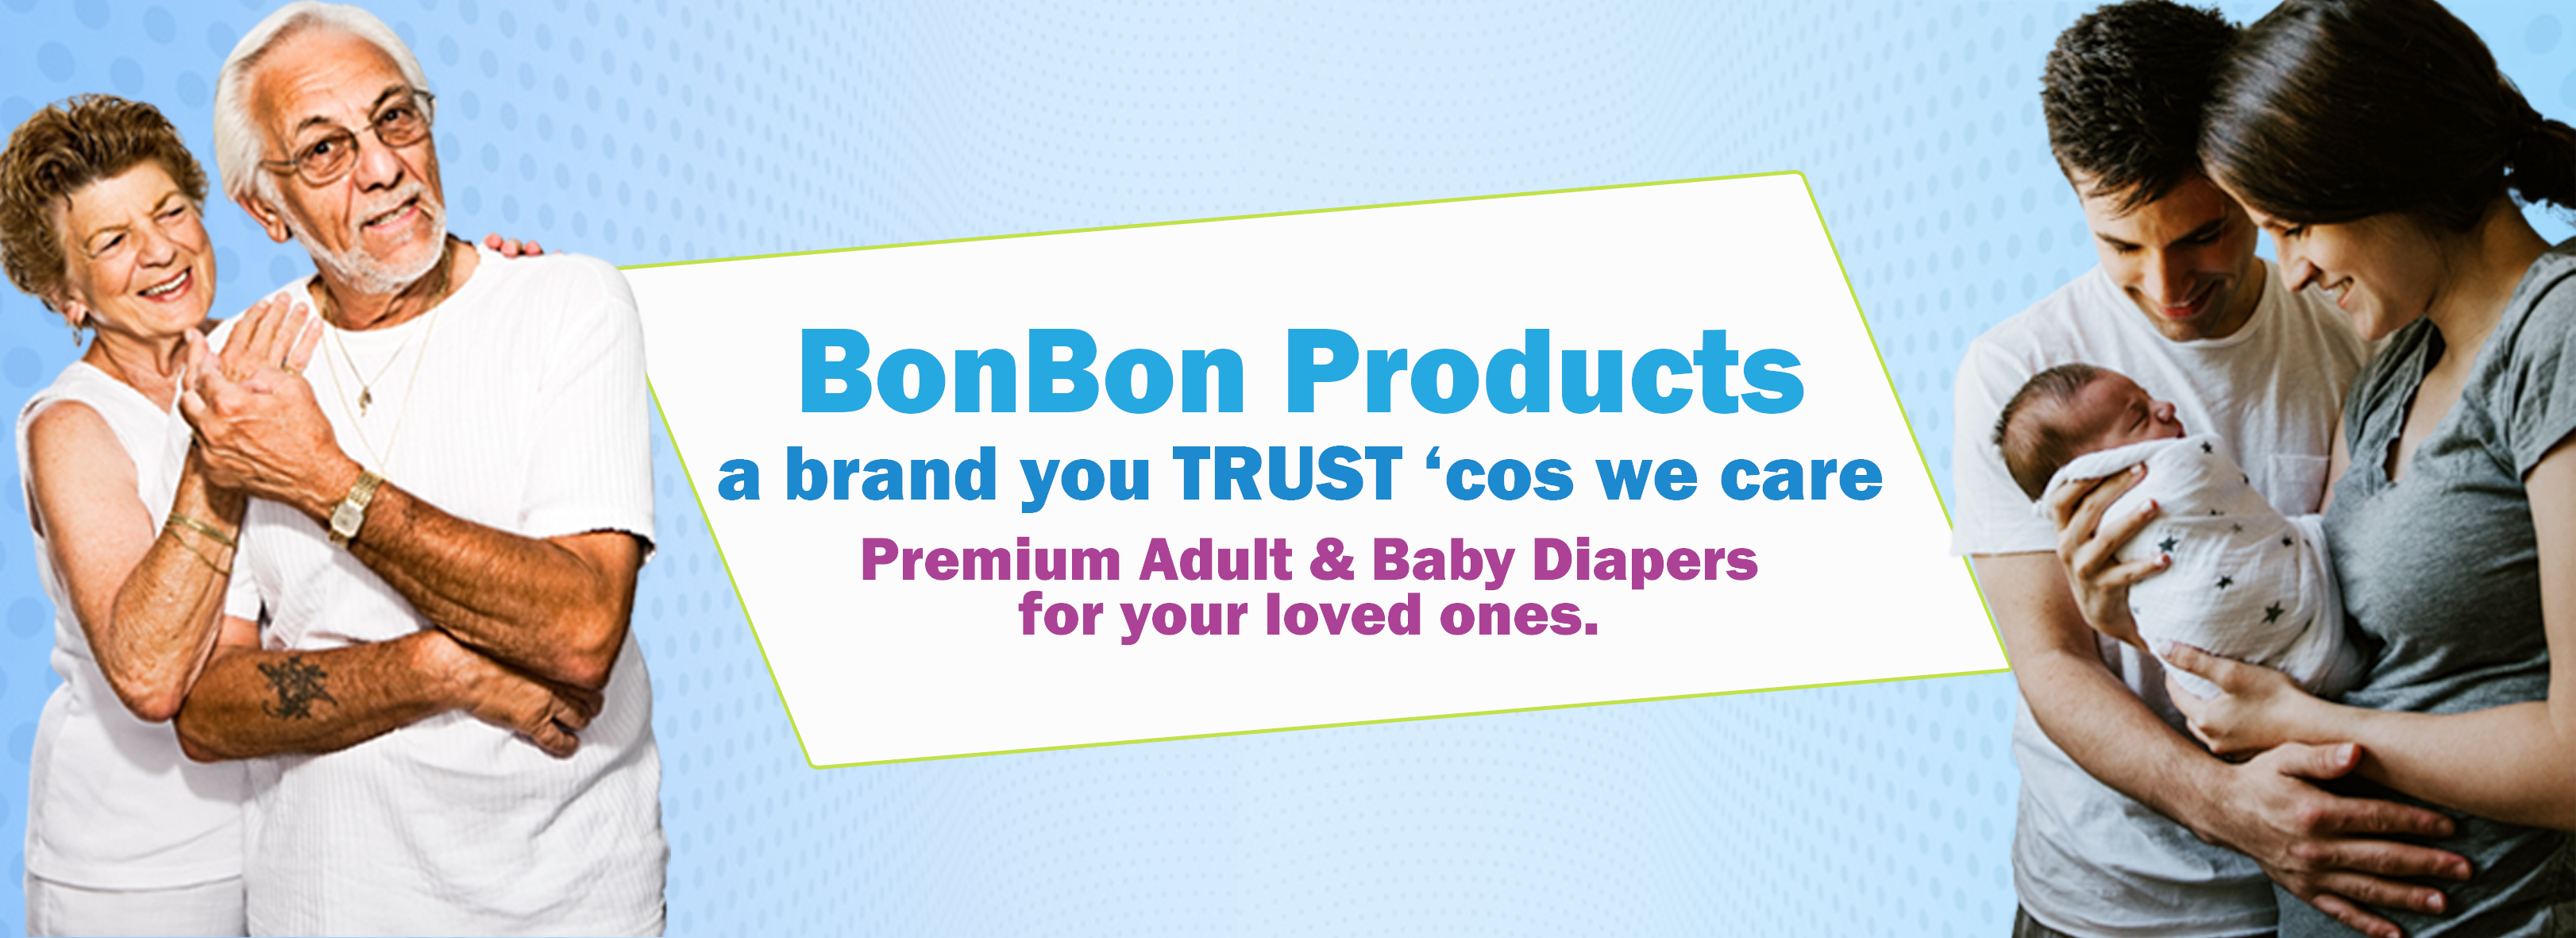 BonBon products we care 